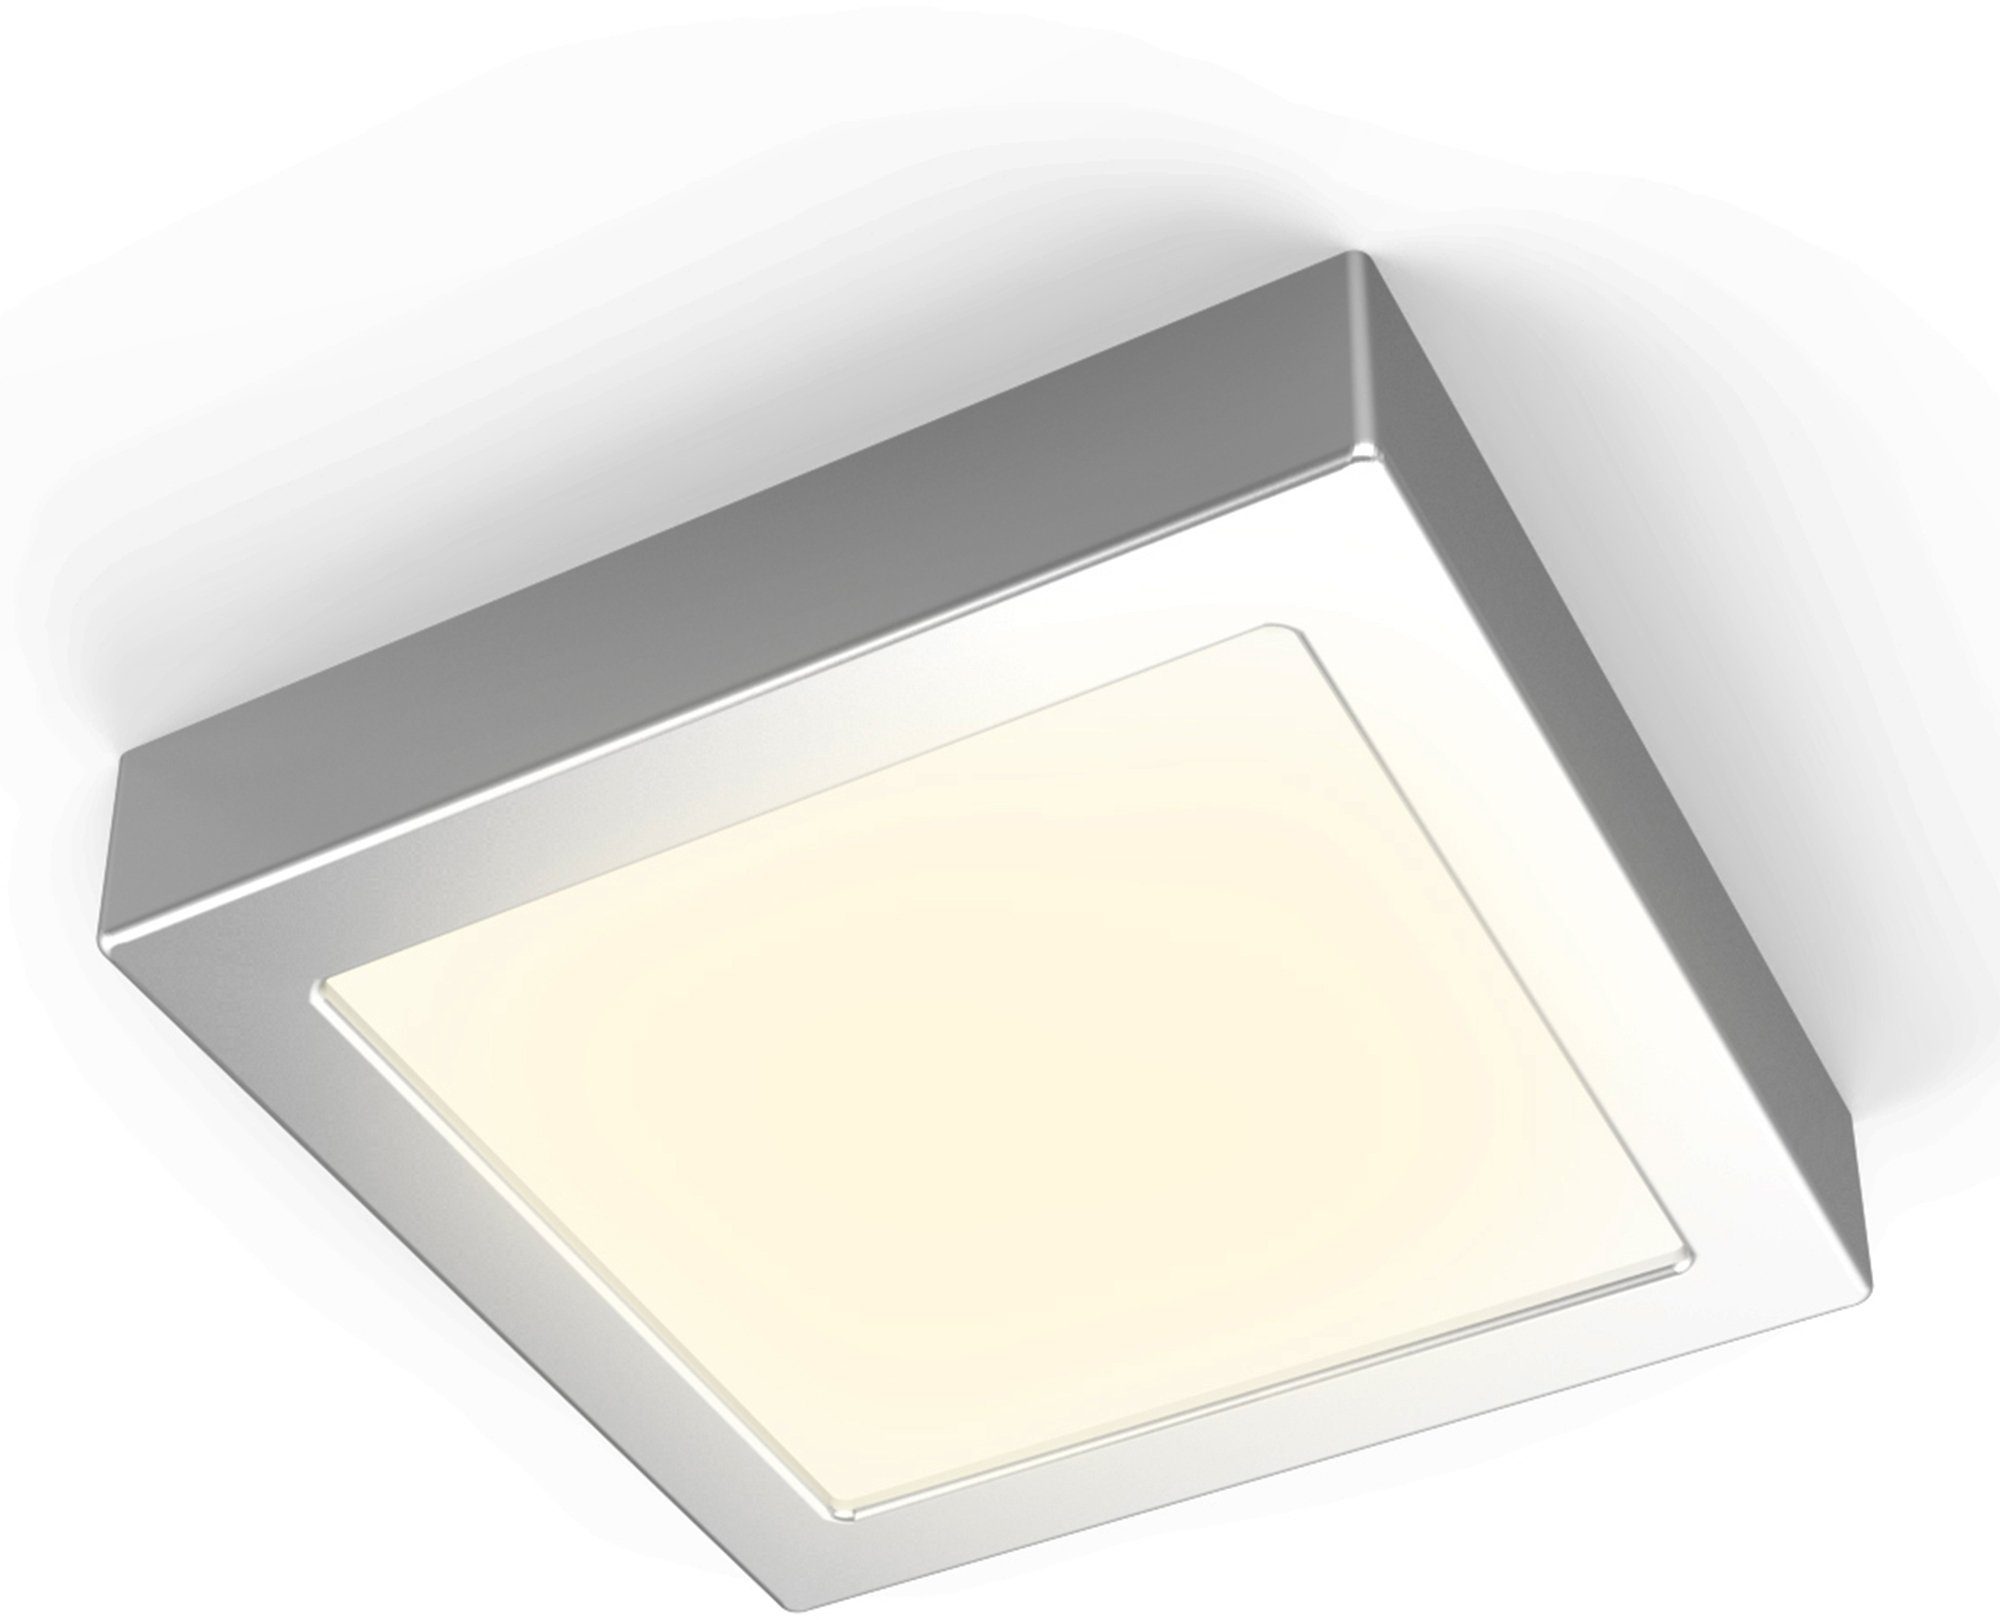 LED fest Warmweiß, Aufbaustrahler B.K.Licht Aufbauleuchte Aufputzspot Unterbauleuchte Garnet, integriert, 12W LED Lampe Panel LED